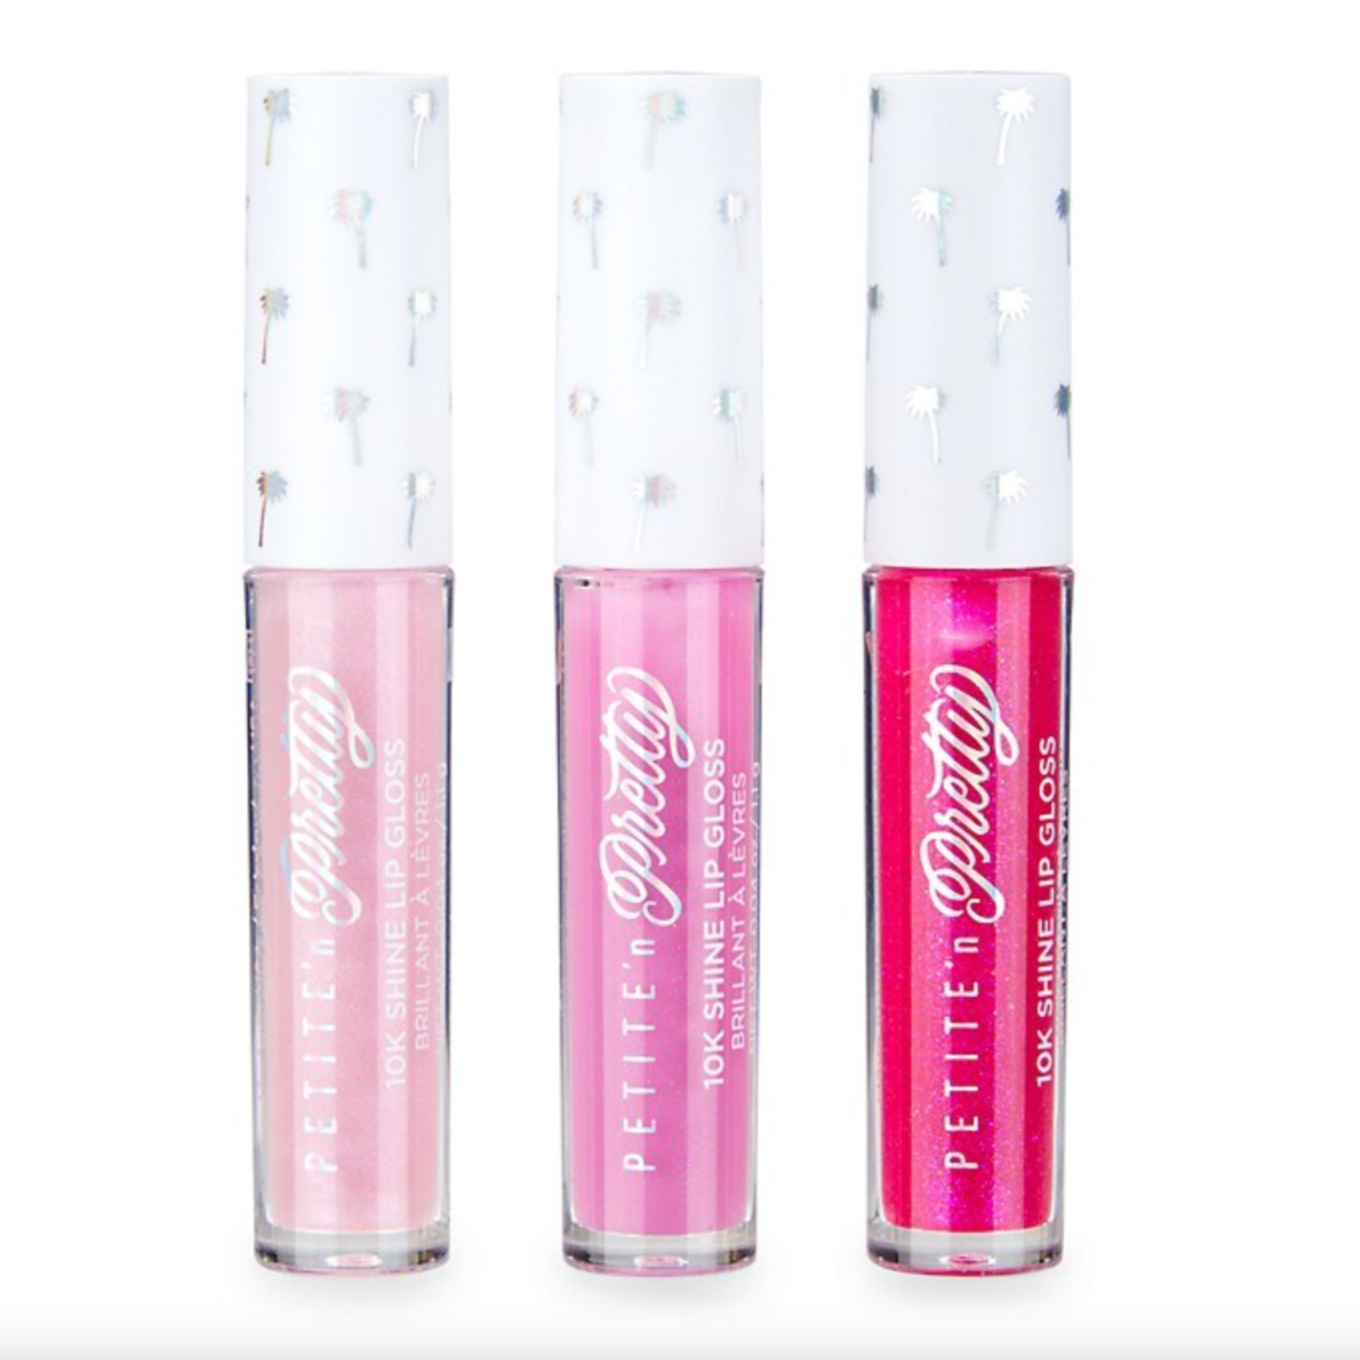 snow-glowed 10k shine lip gloss trio